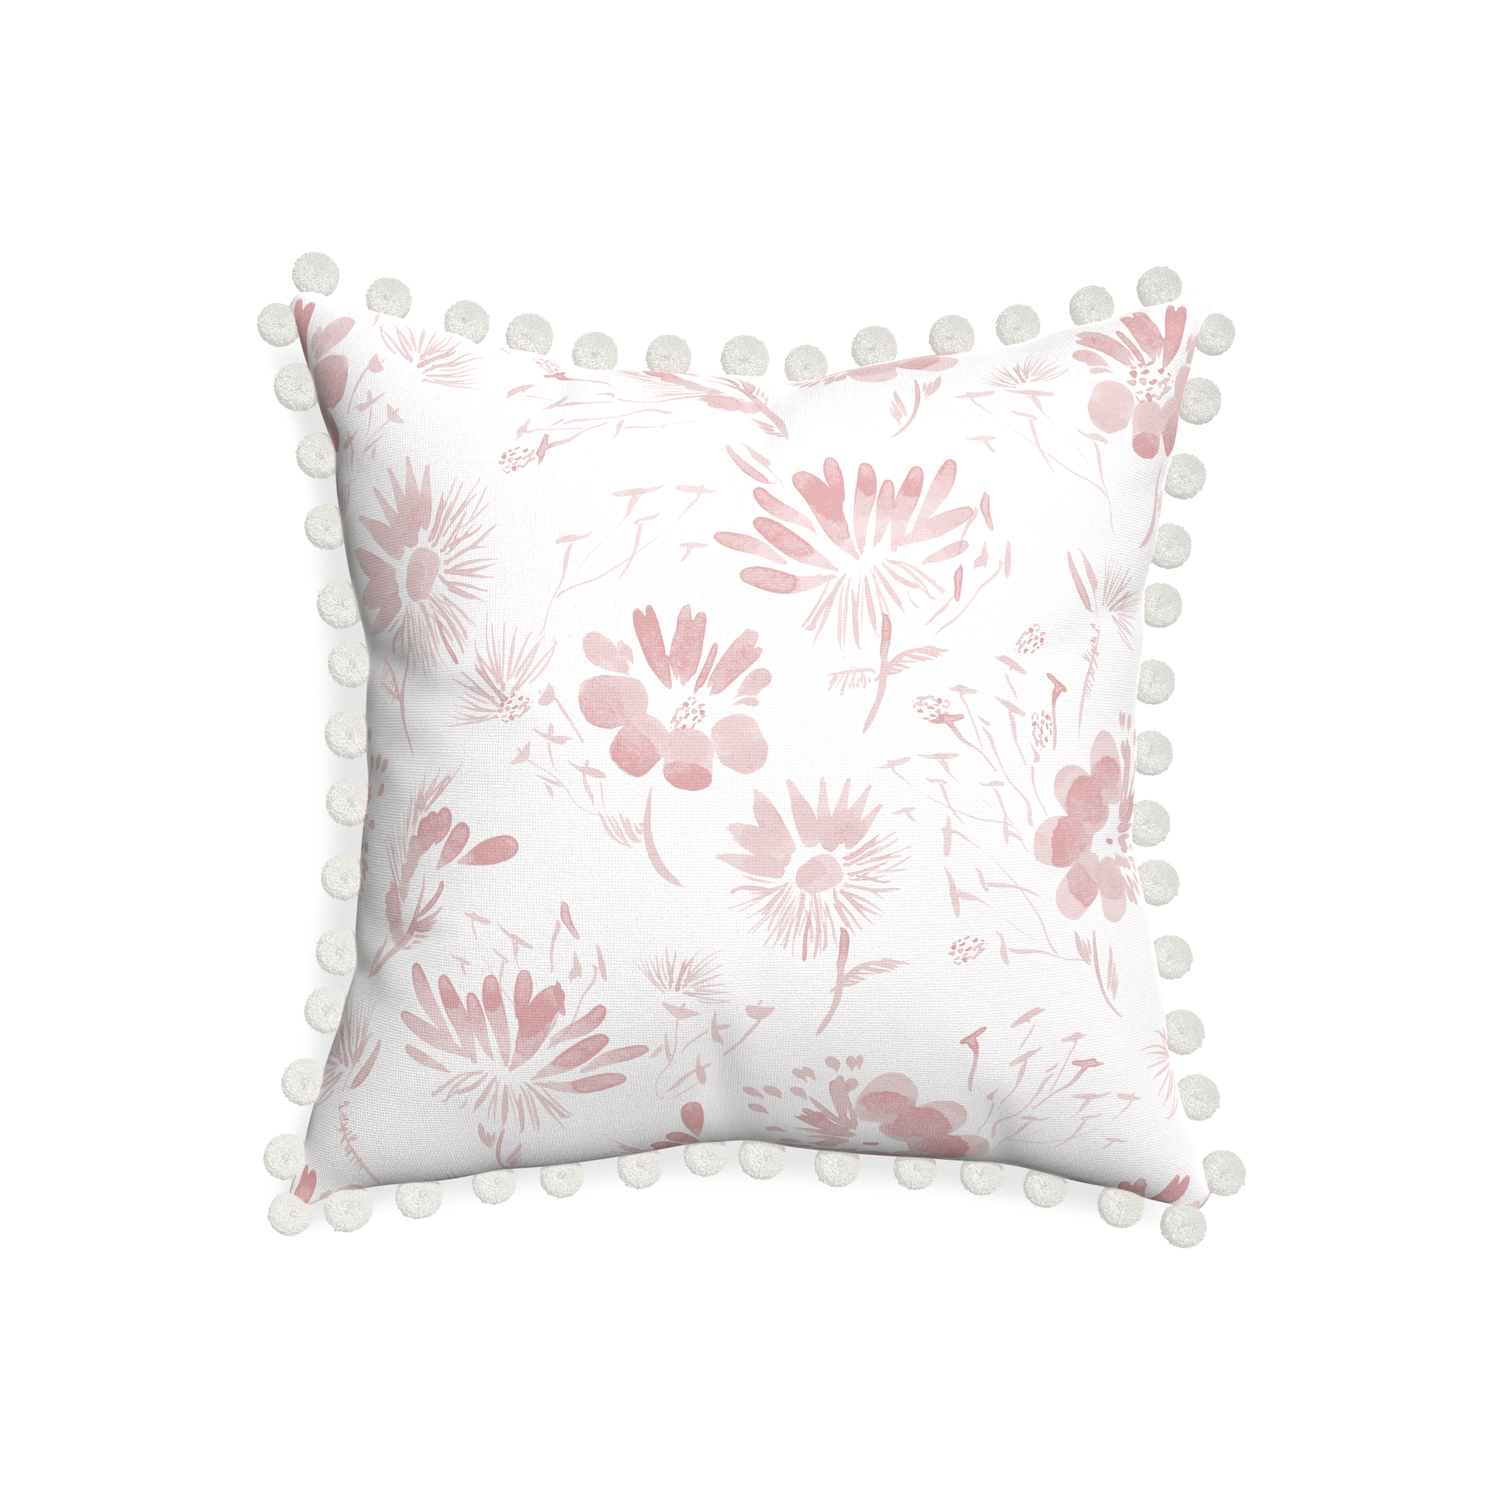 20-square blake custom pink floralpillow with snow pom pom on white background